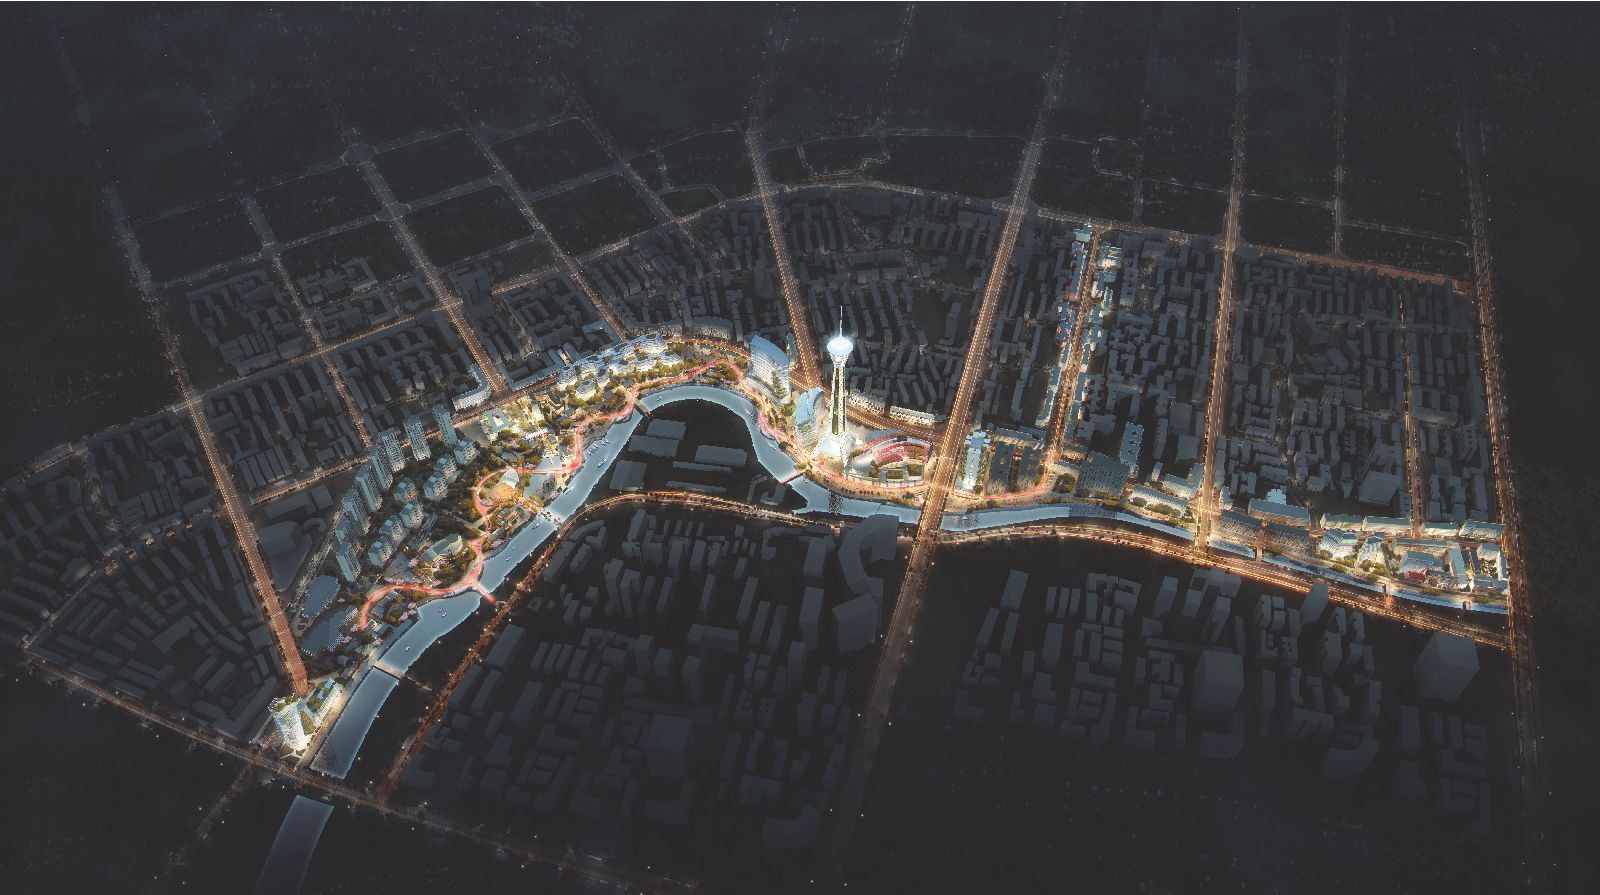 Mengzhuiwan Urban Regeneration 